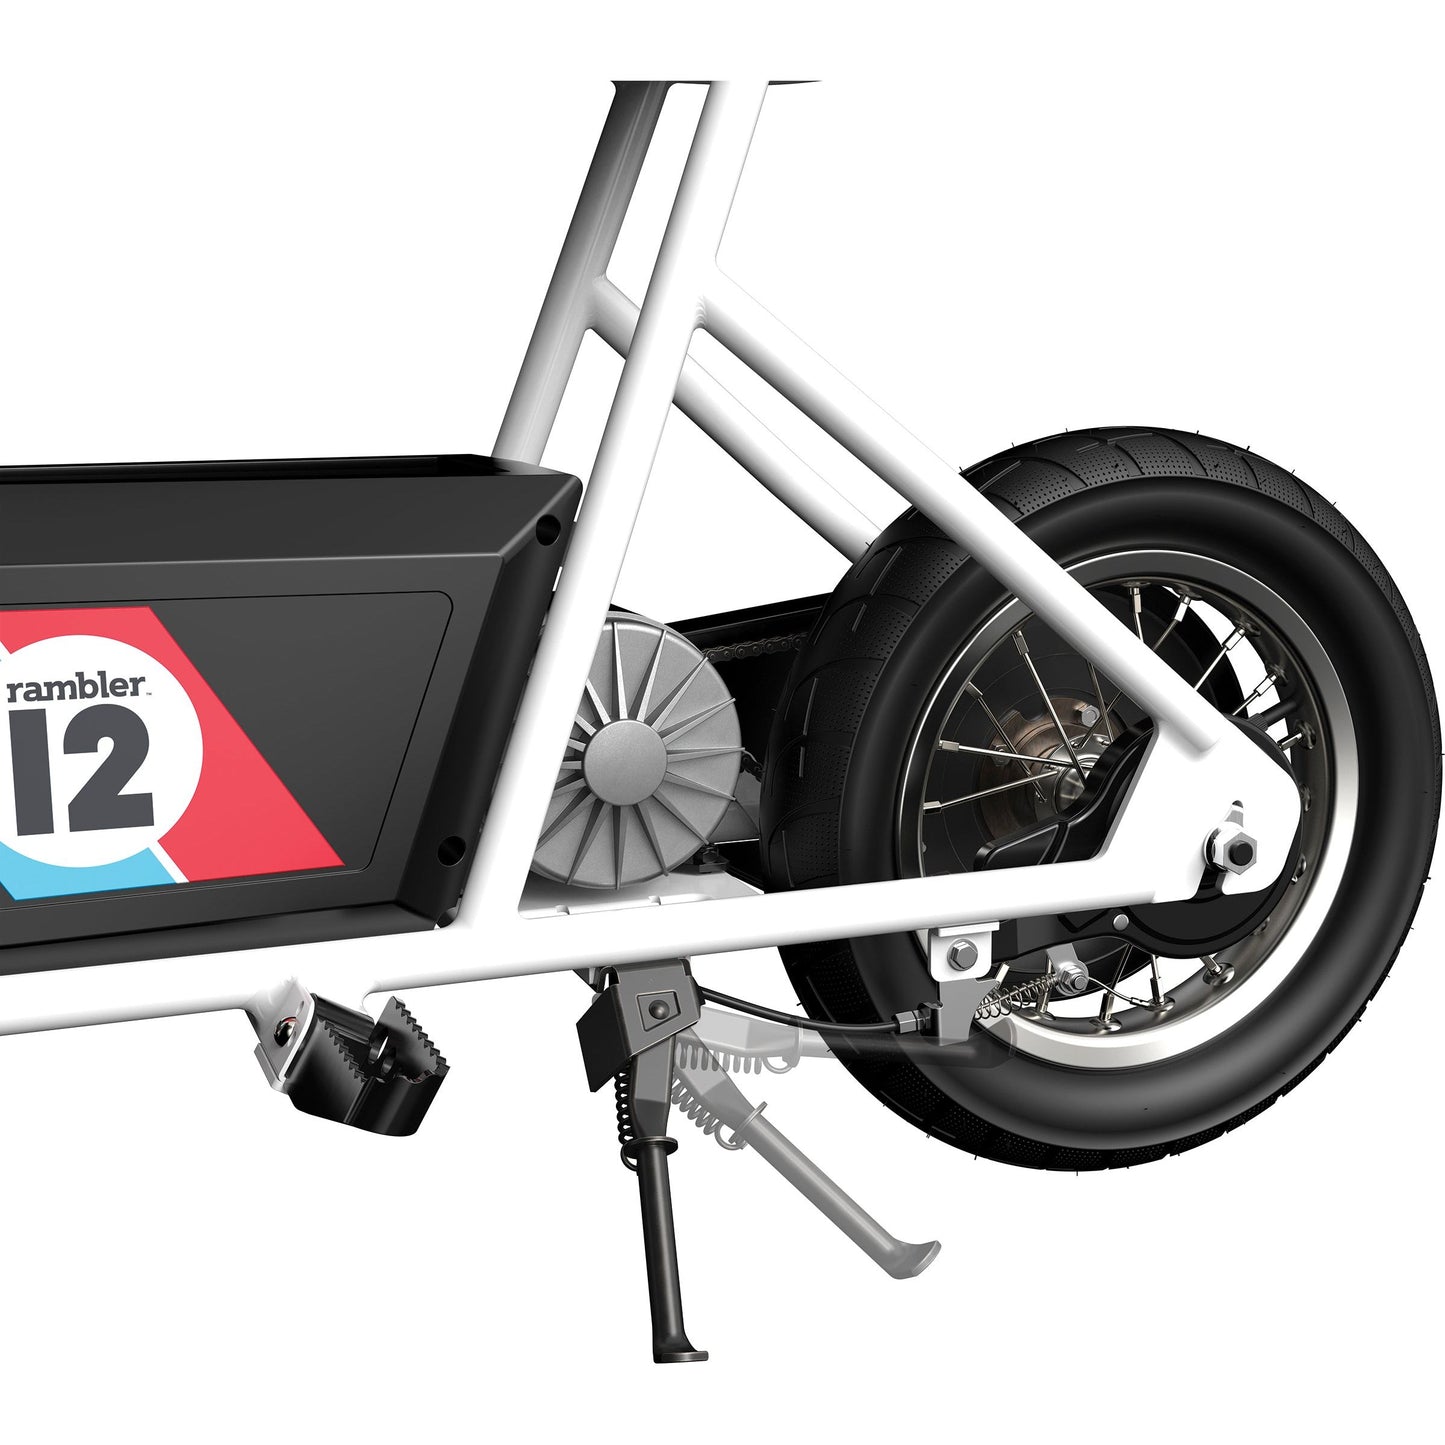 Razor Rambler 12 Volt Electric Ride On Motorbike kickstand